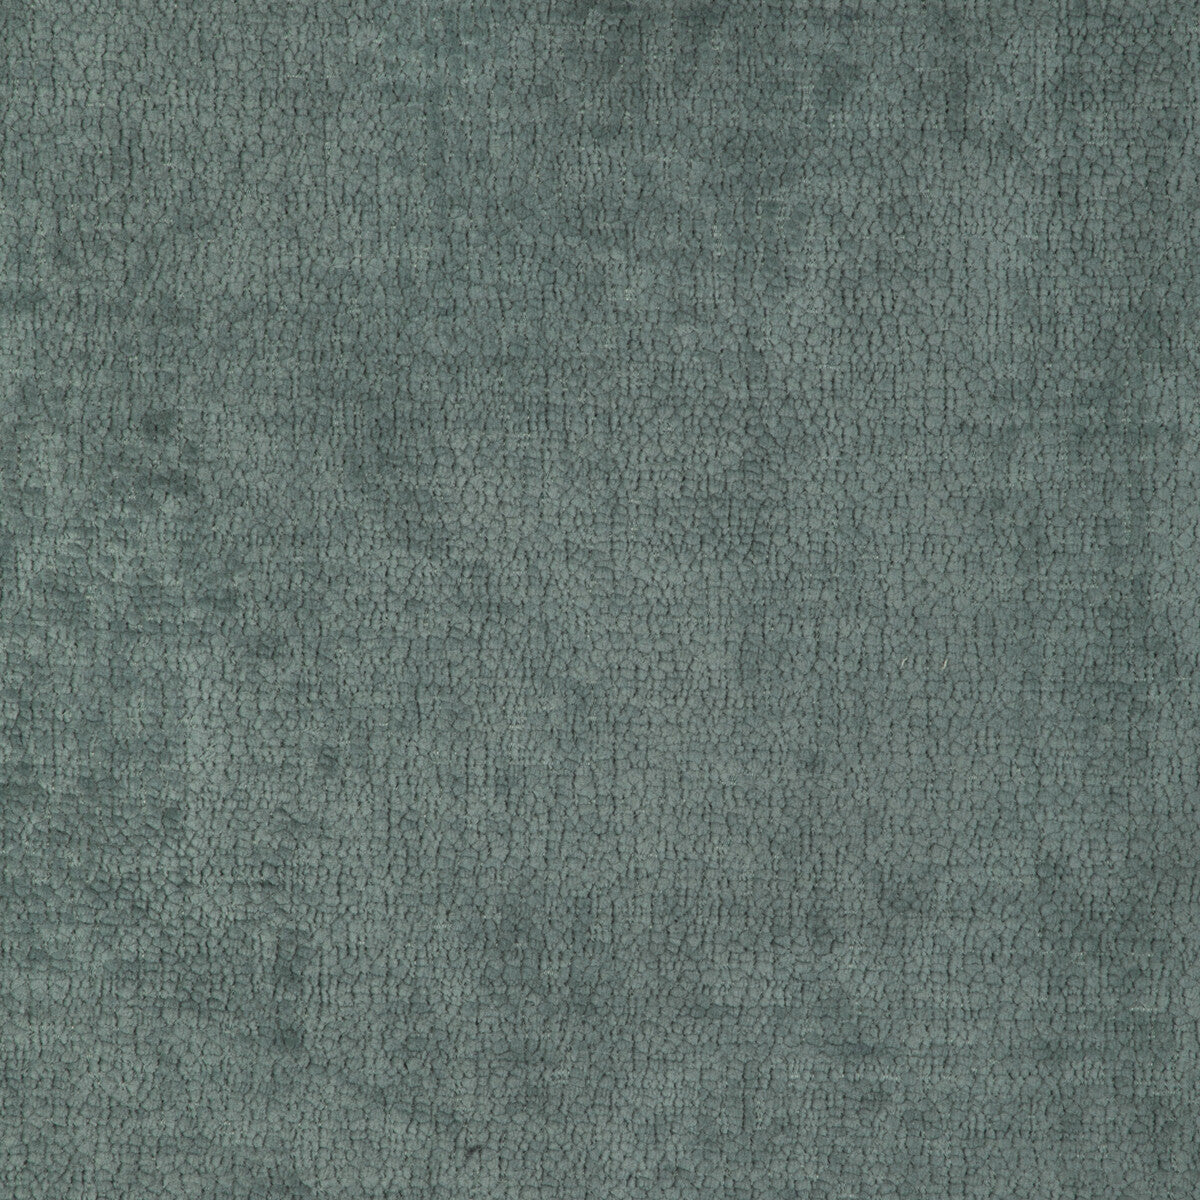 Kravet Smart fabric in 36997-135 color - pattern 36997.135.0 - by Kravet Smart